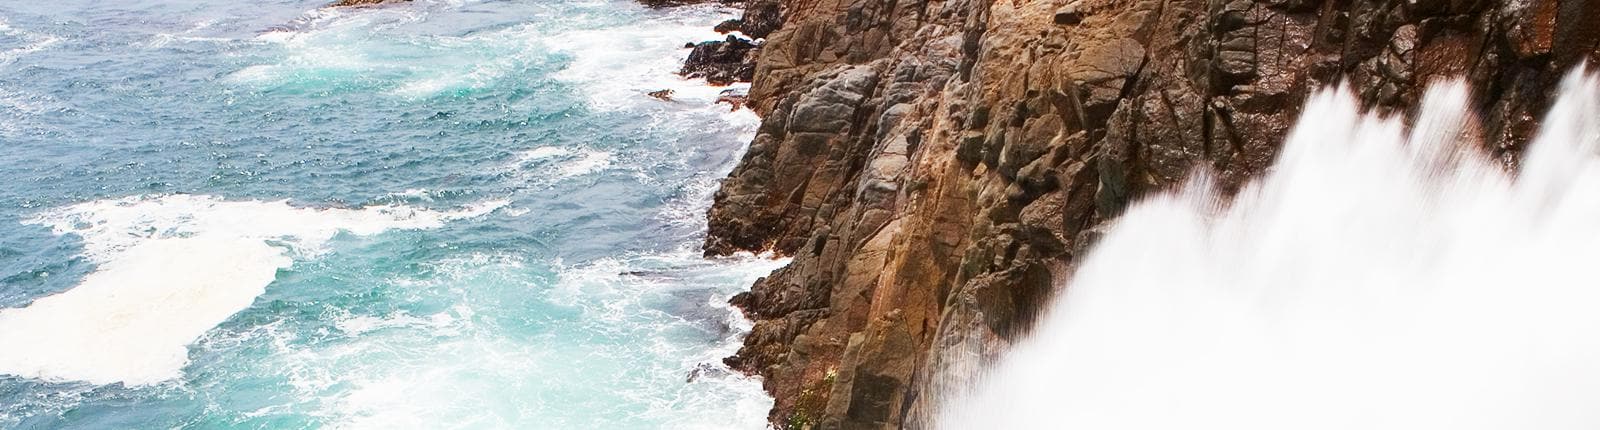 Waves crashing onto a beautiful natural rock formation along the coast of Ensenada, Mexico